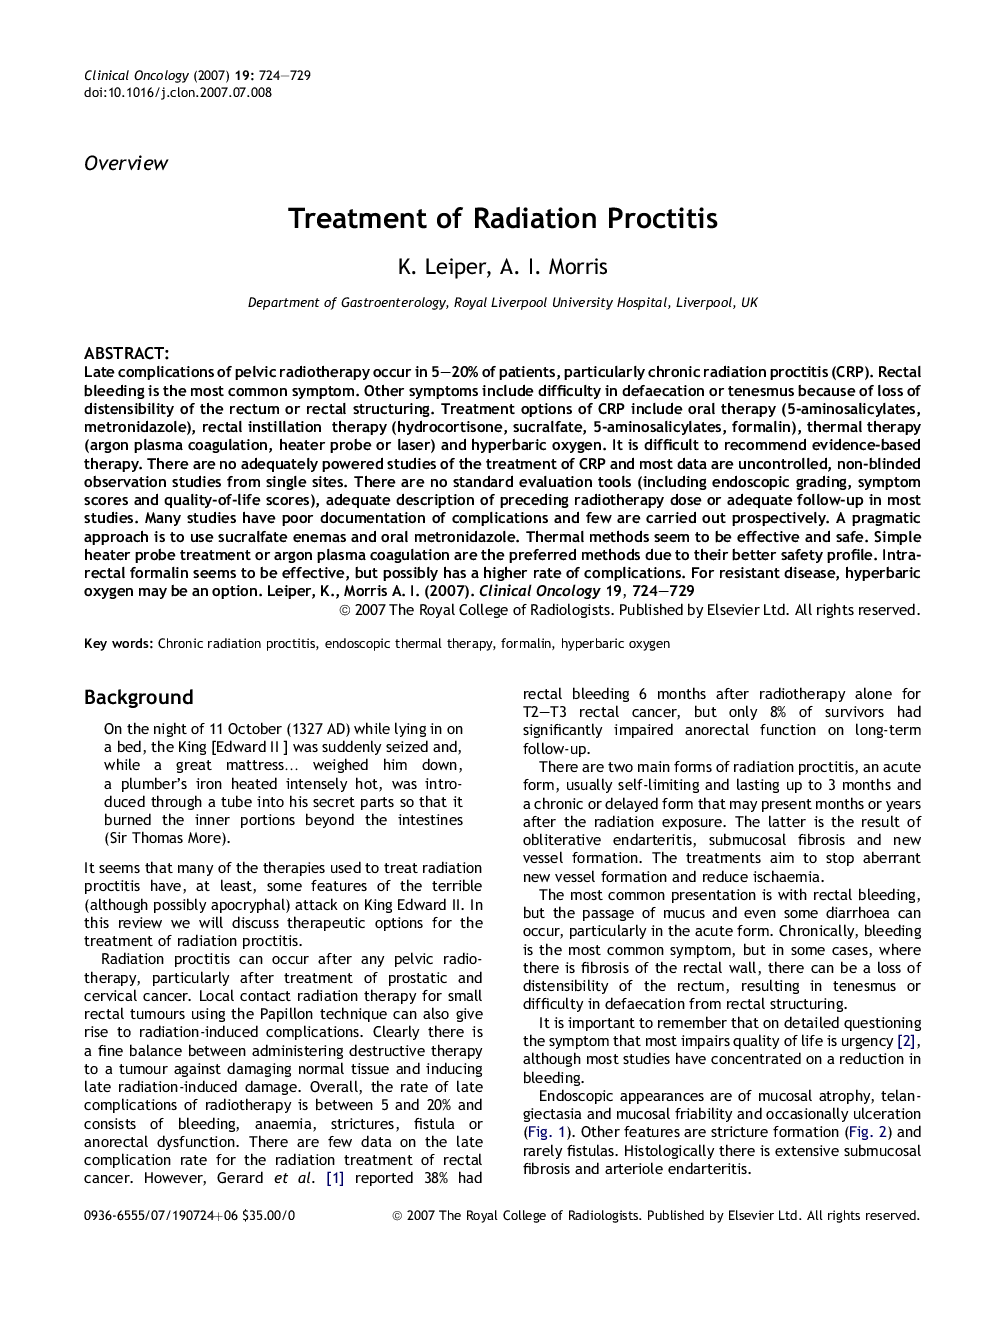 Treatment of Radiation Proctitis